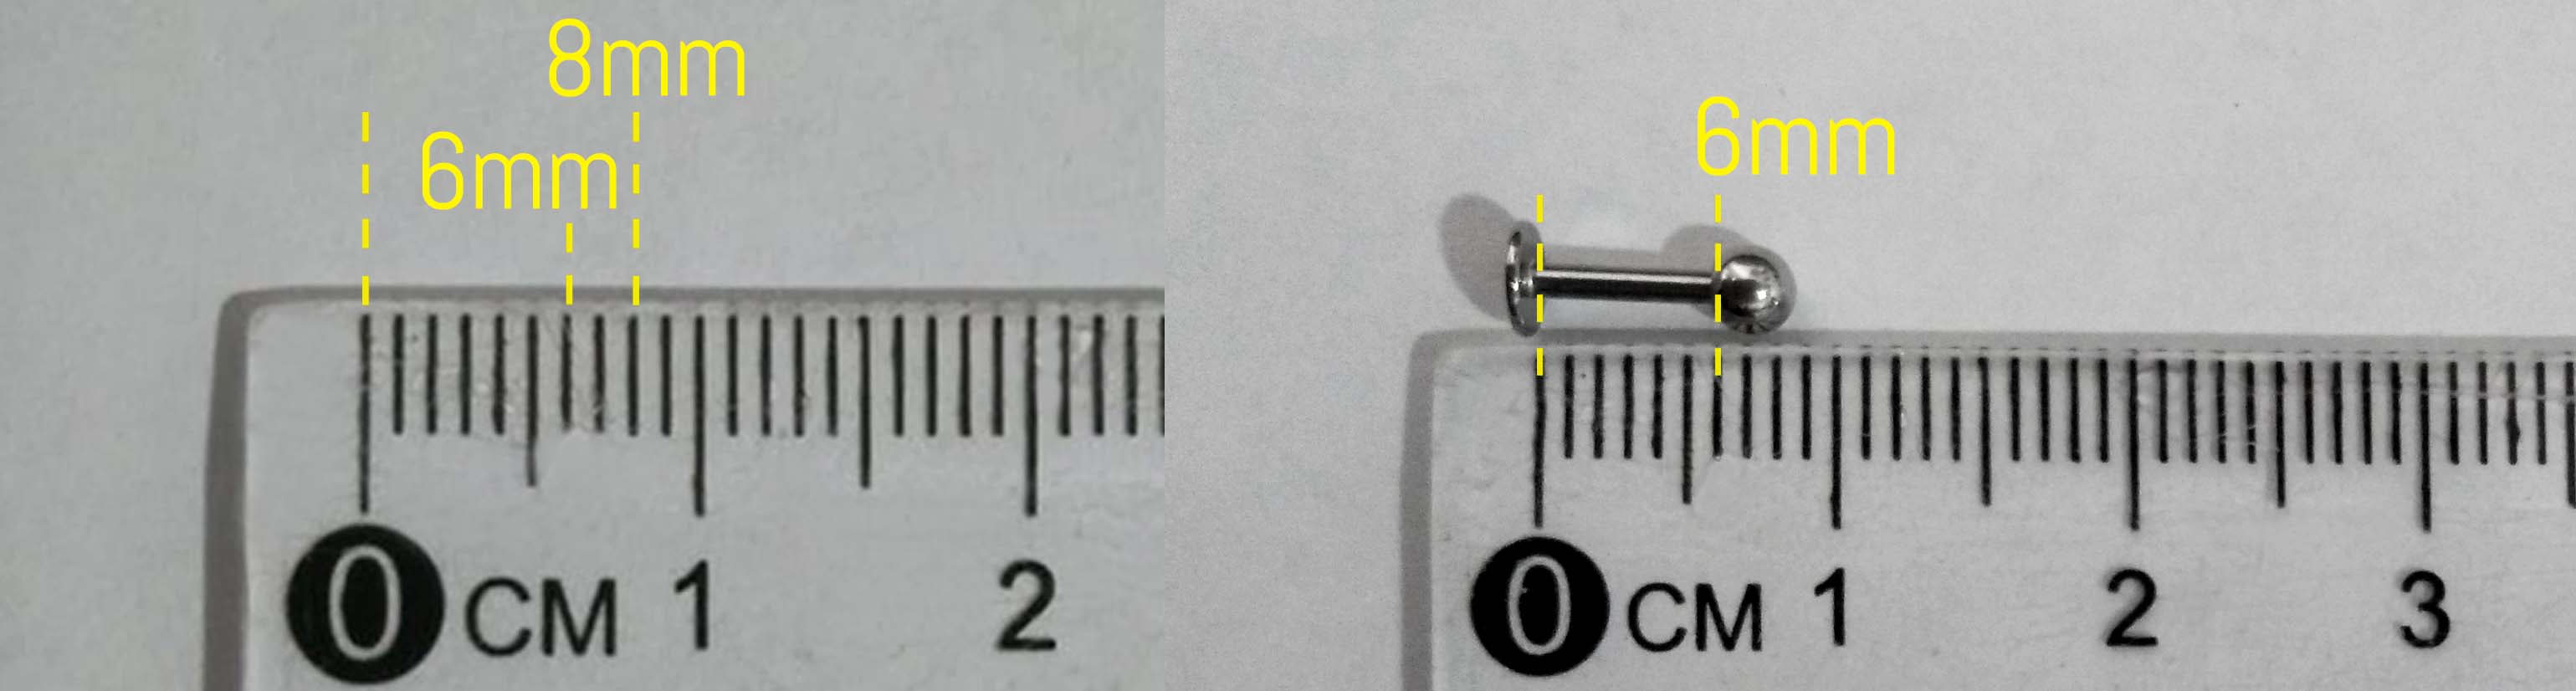 como-medir-piercing-2.jpg